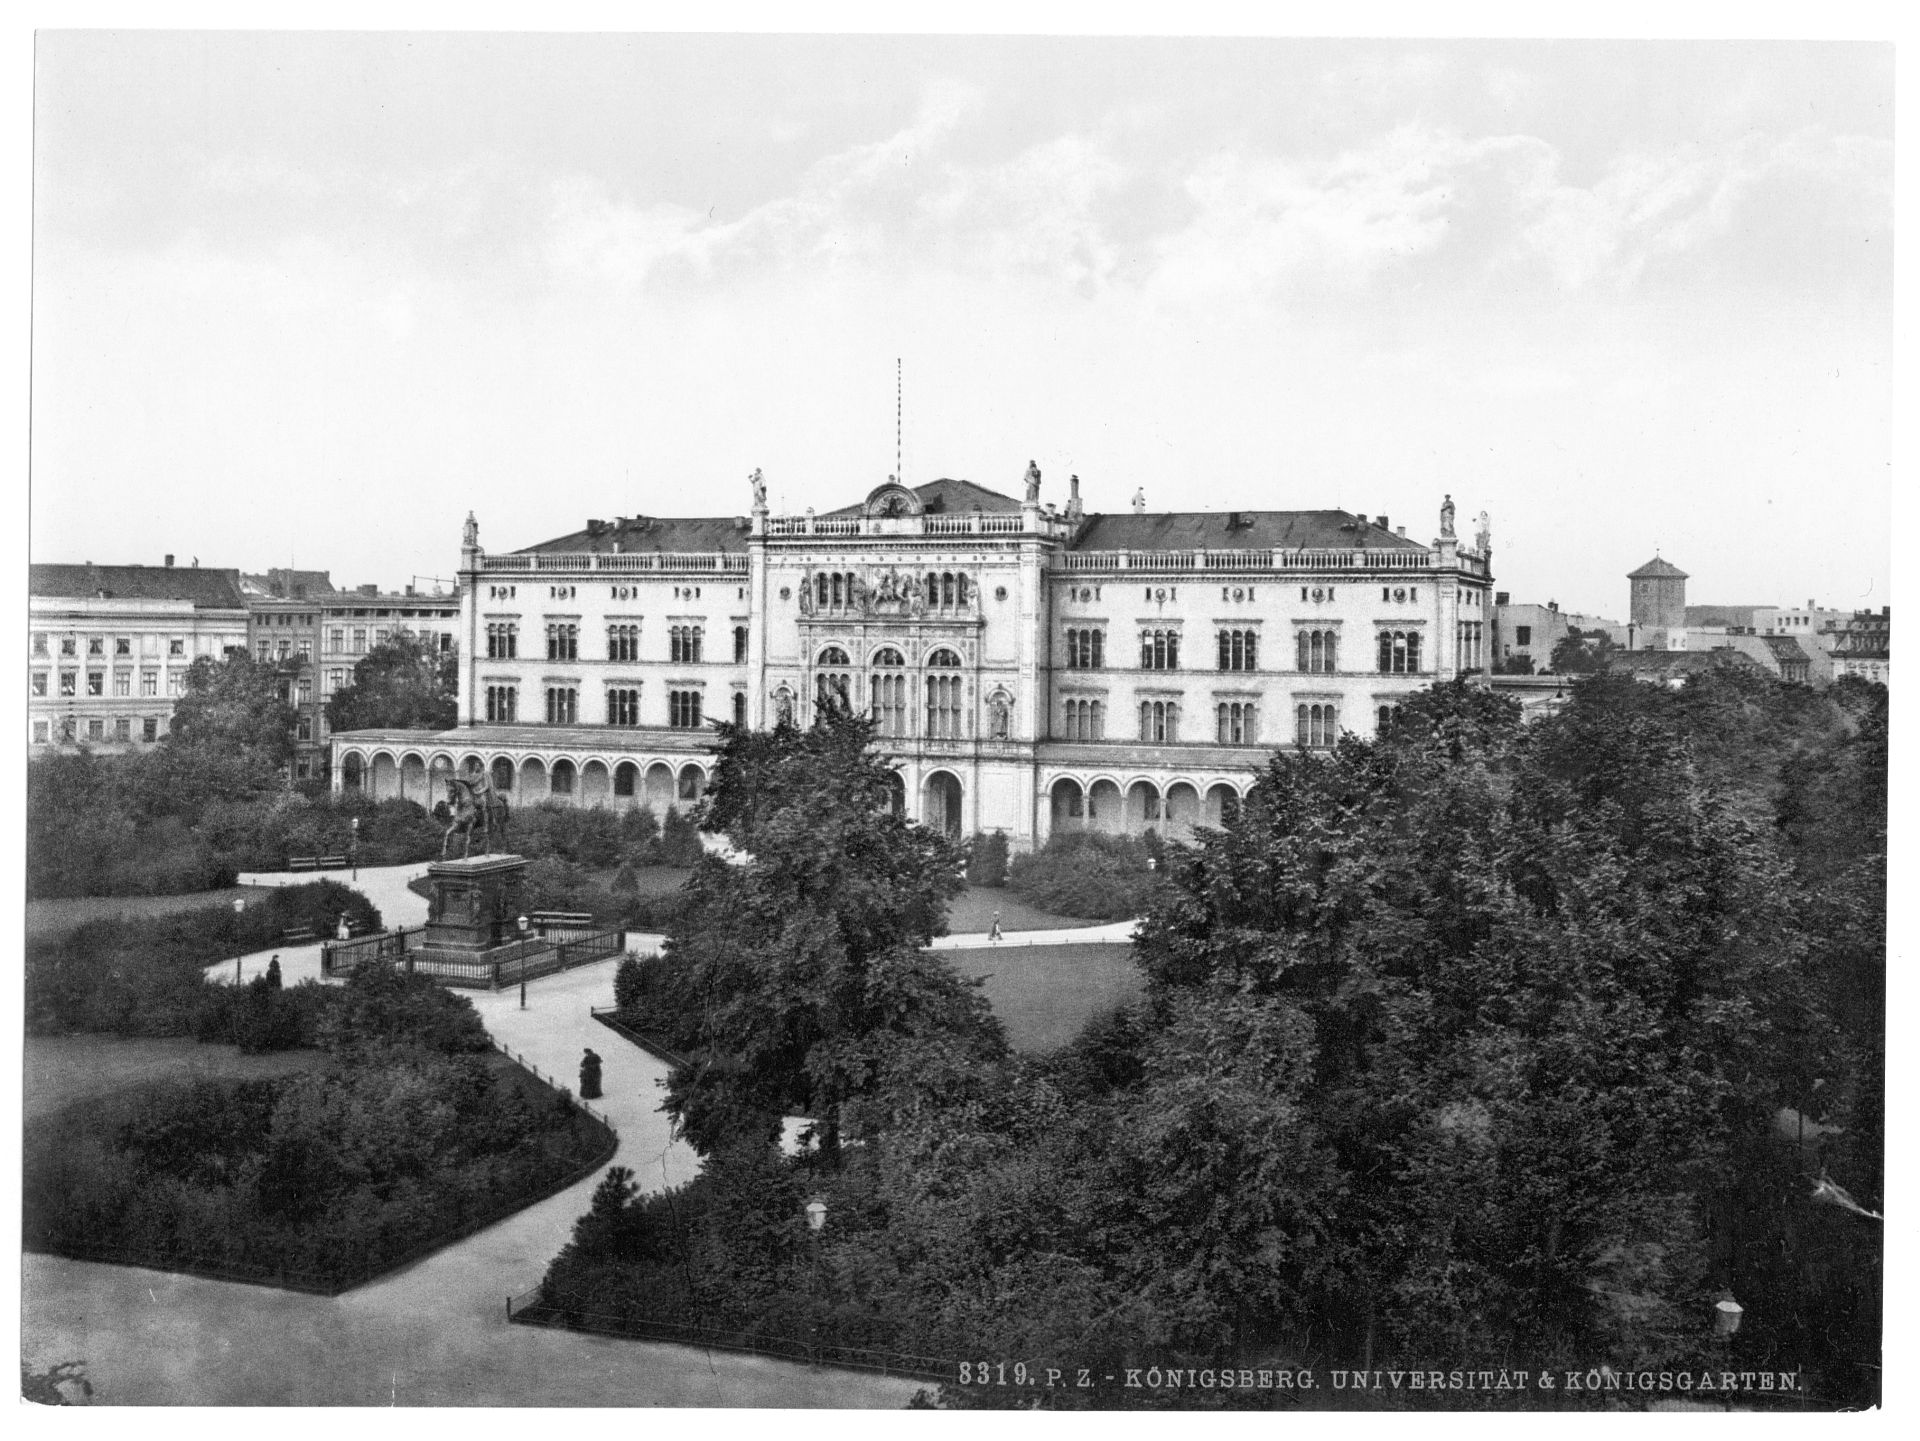 University and Royal Garden, Konigsberg, East Prussia, Germany (i.e., Kaliningrad, Kaliningradskai︠a︡ oblastʹ, Russia)